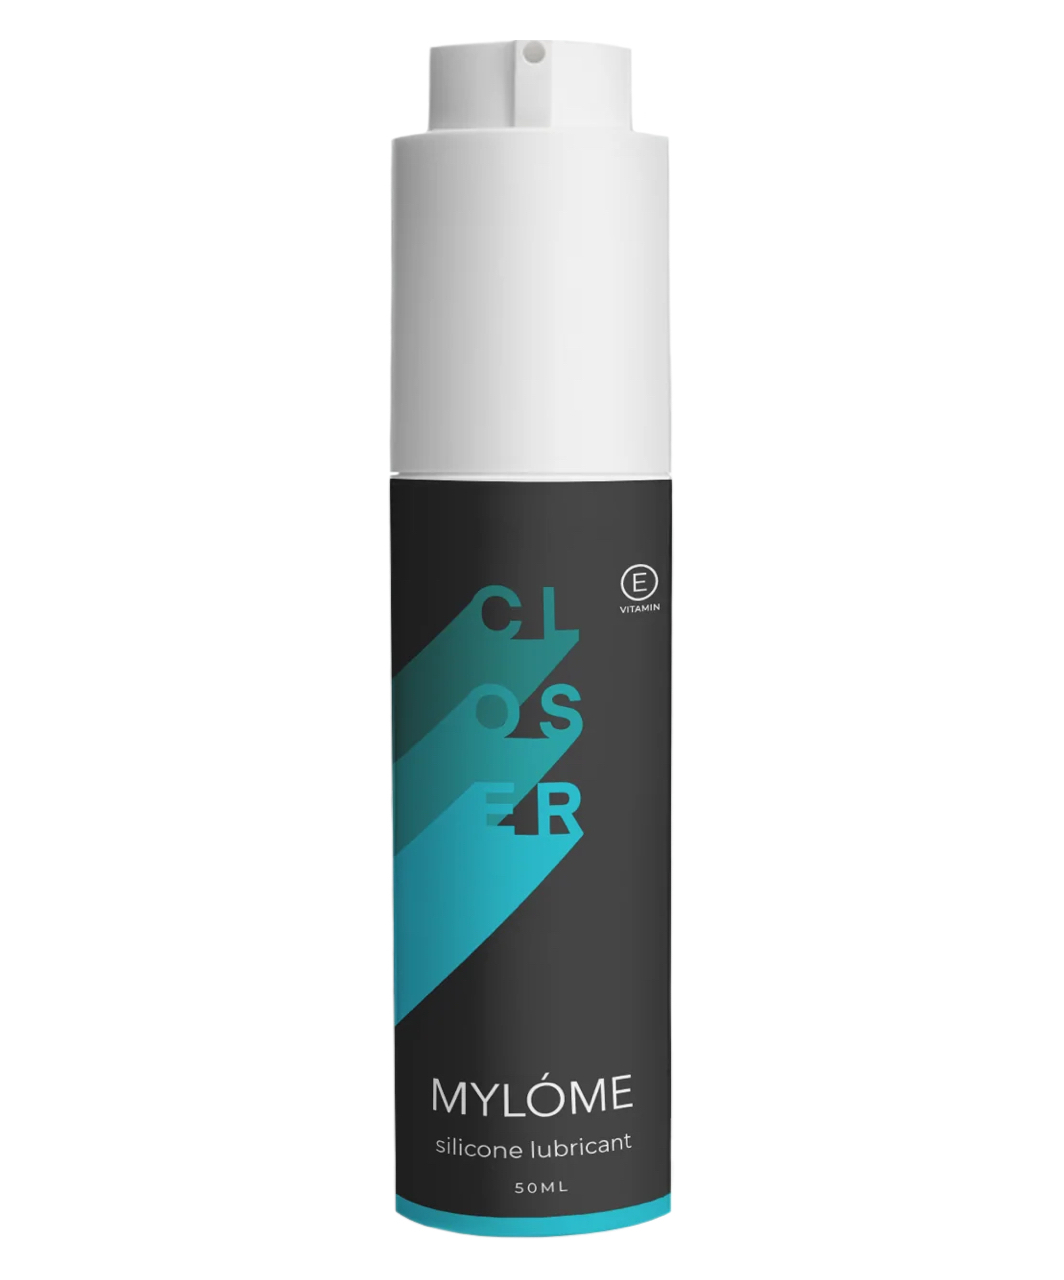 MYLOME silicone lubricant (50 ml)